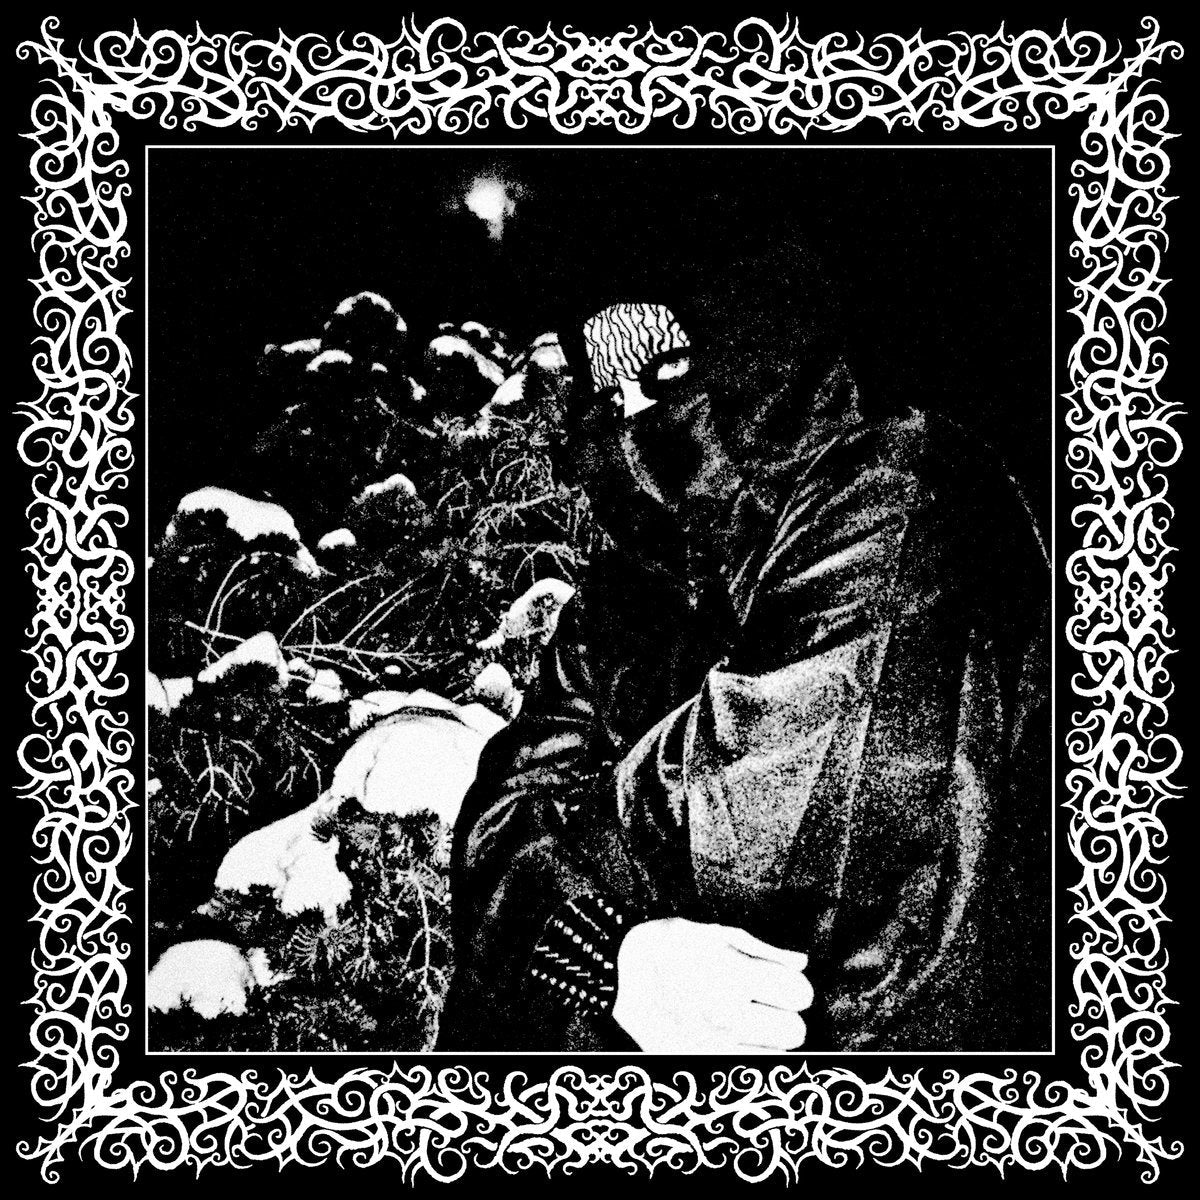 [SOLD OUT] ARAZUBAK "The Haunted Spawn of Torment" vinyl LP